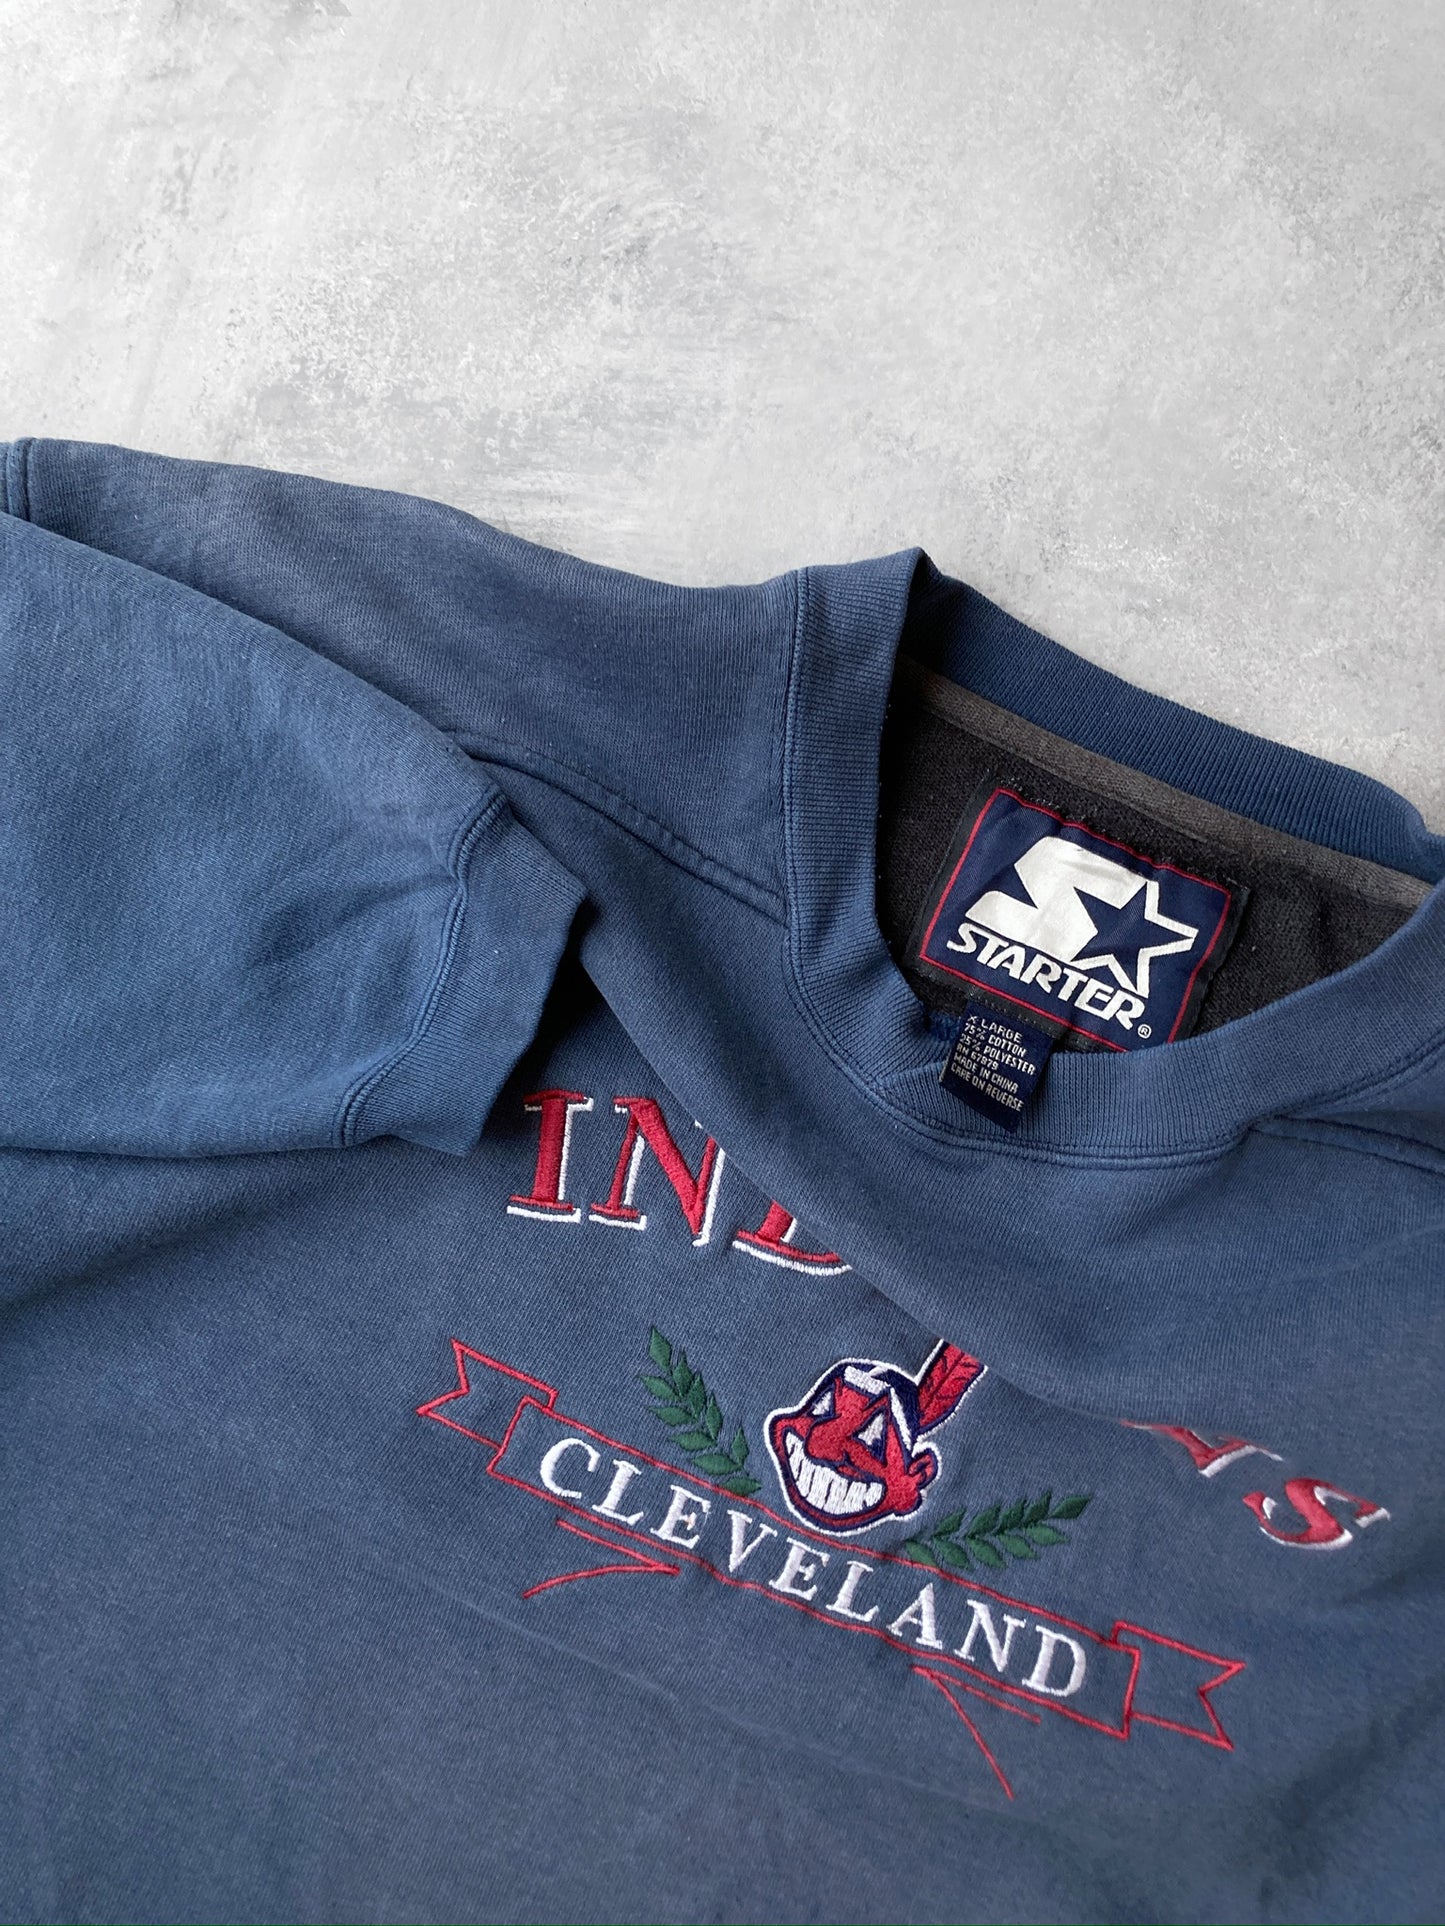 Cleveland Indians Sweatshirt 90's - XL